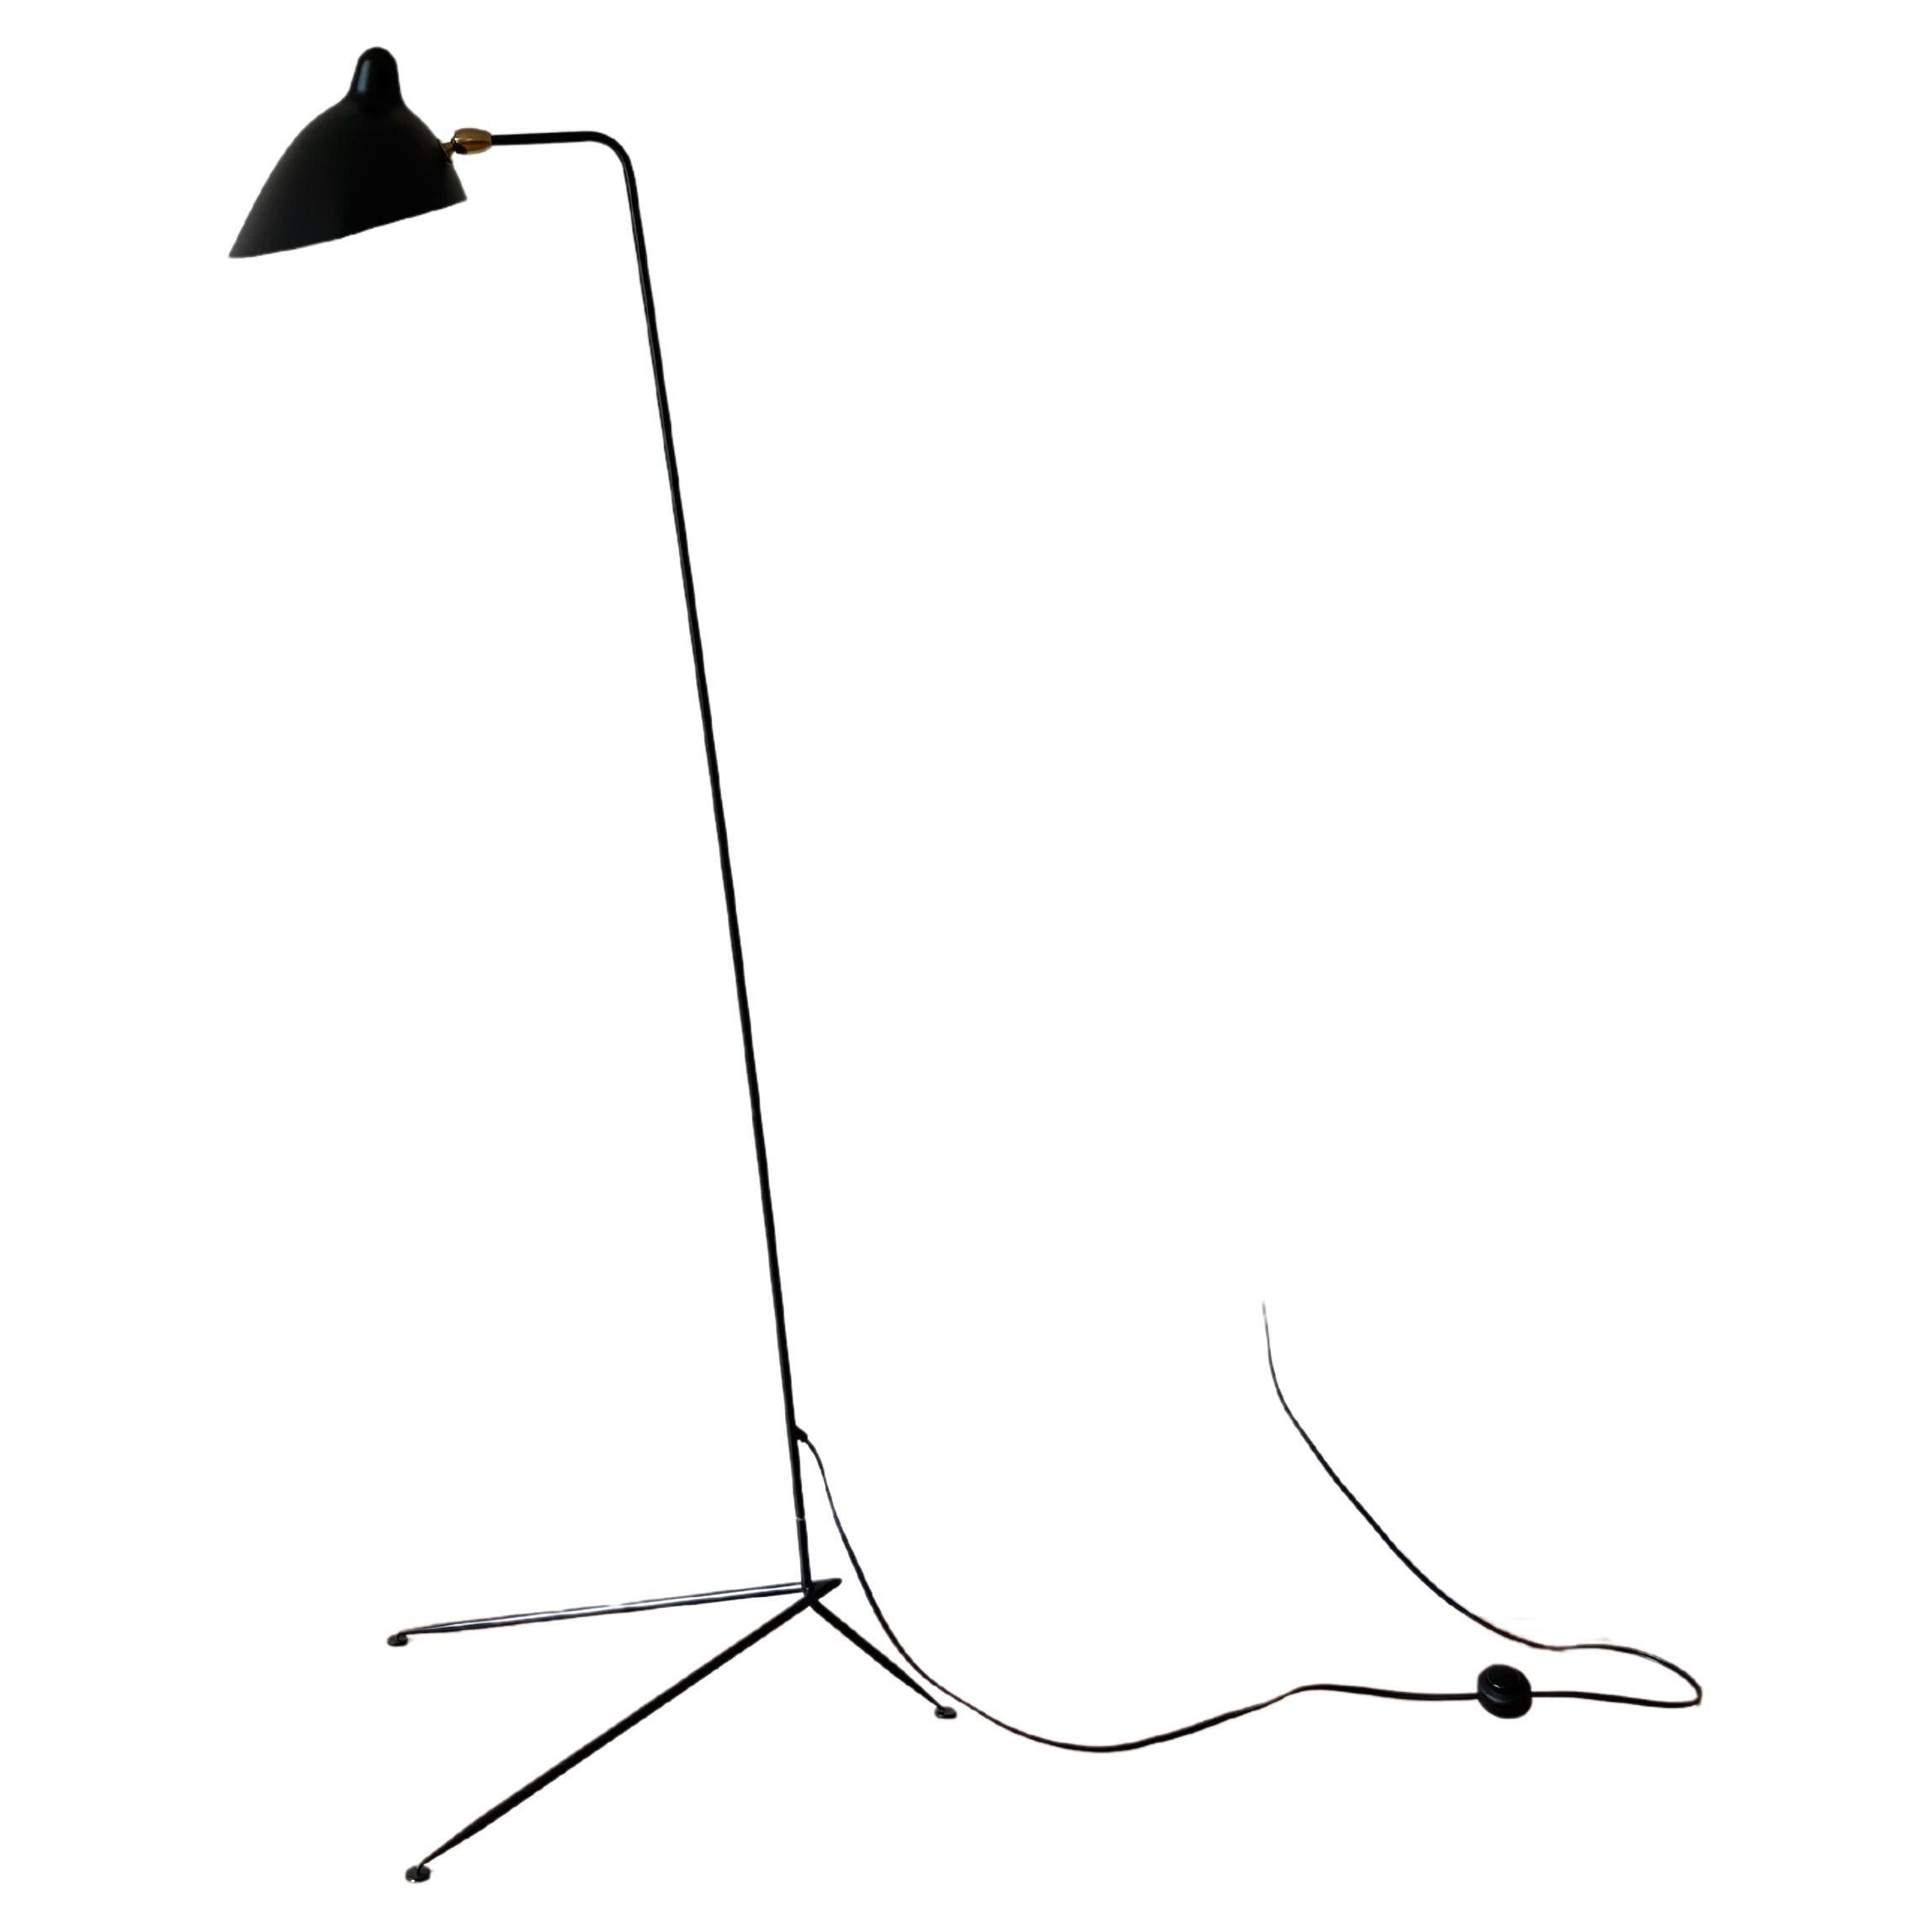 Serge Mouille One Arm Floor Lamp